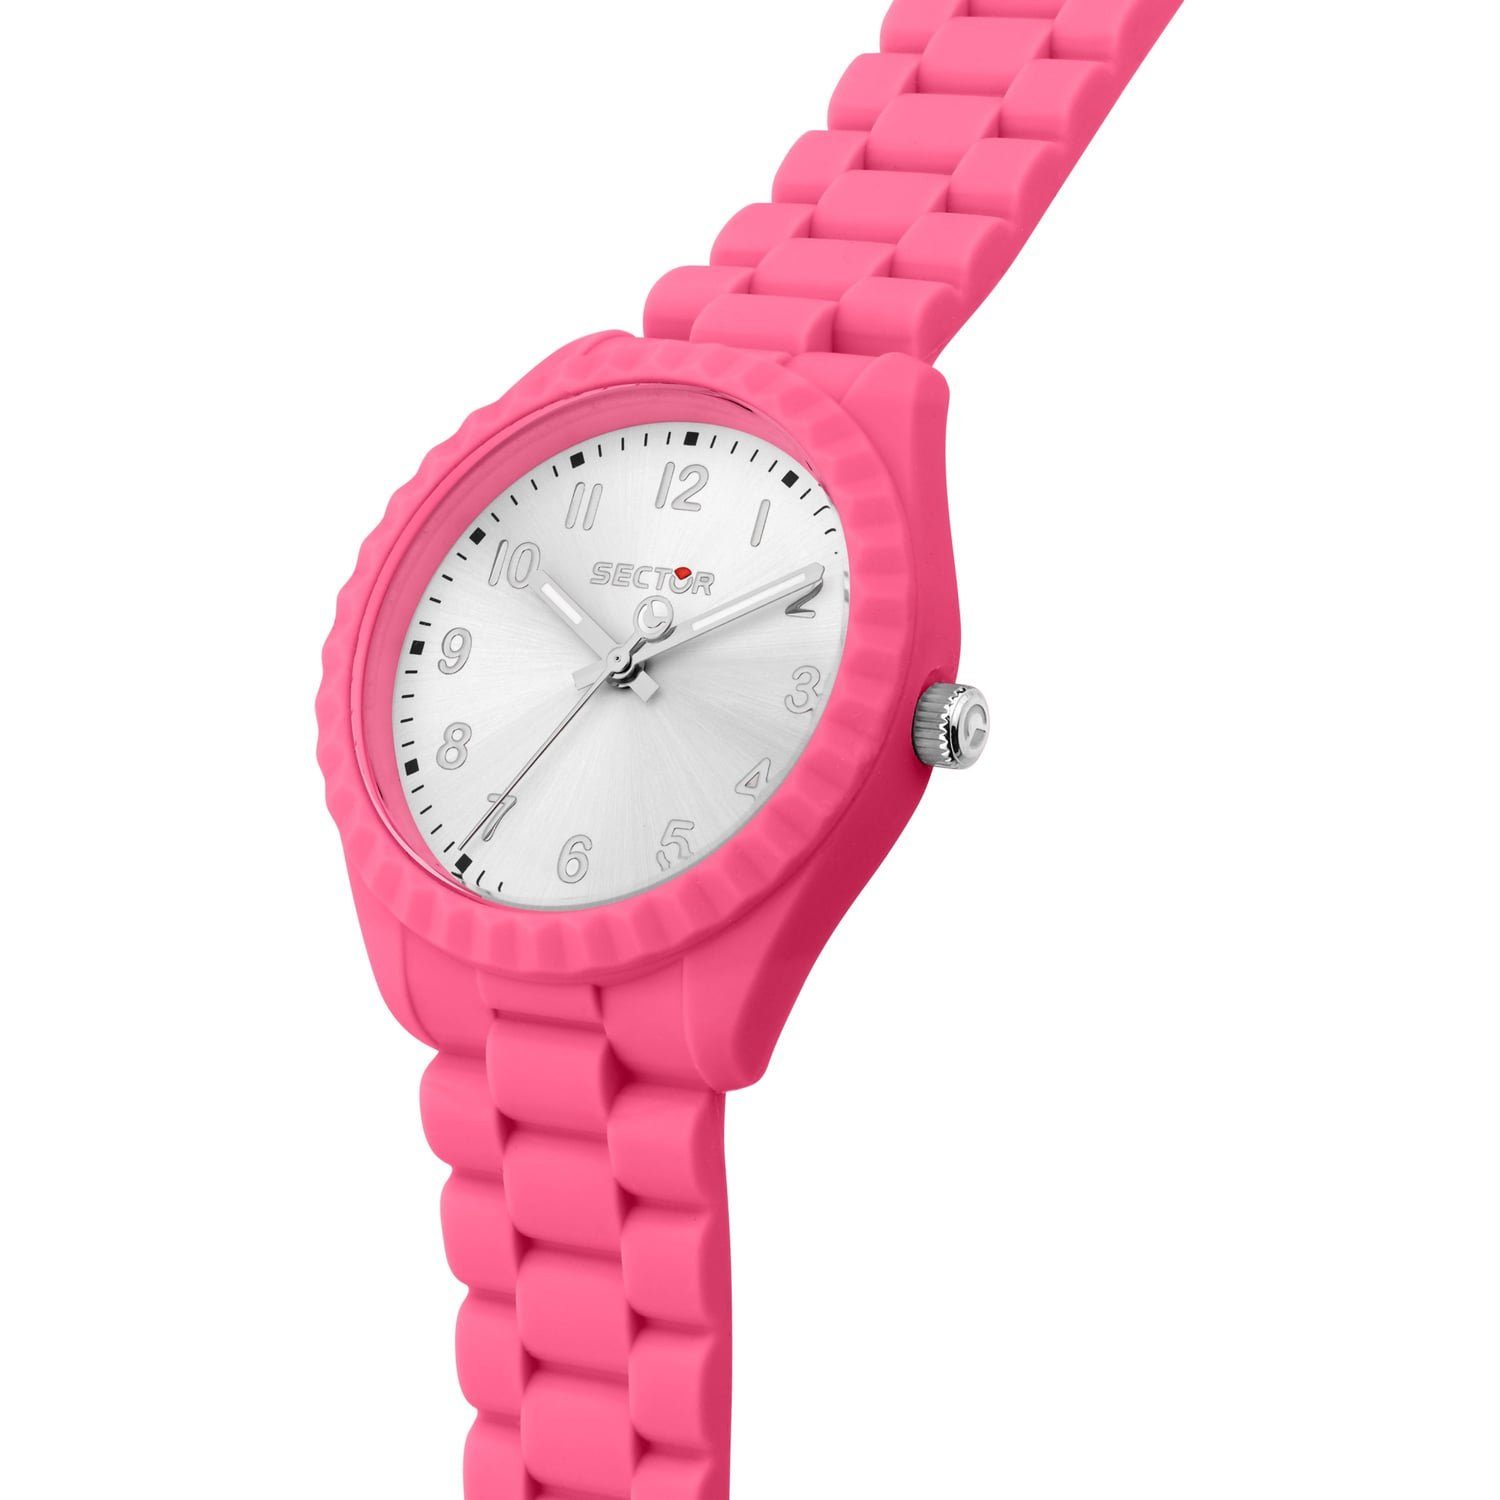 Damen rosa, (ca. Armbanduhr Damen Fashion Sector Armbanduhr Silikonarmband rund, Quarzuhr Analog, Sector 42mm), groß